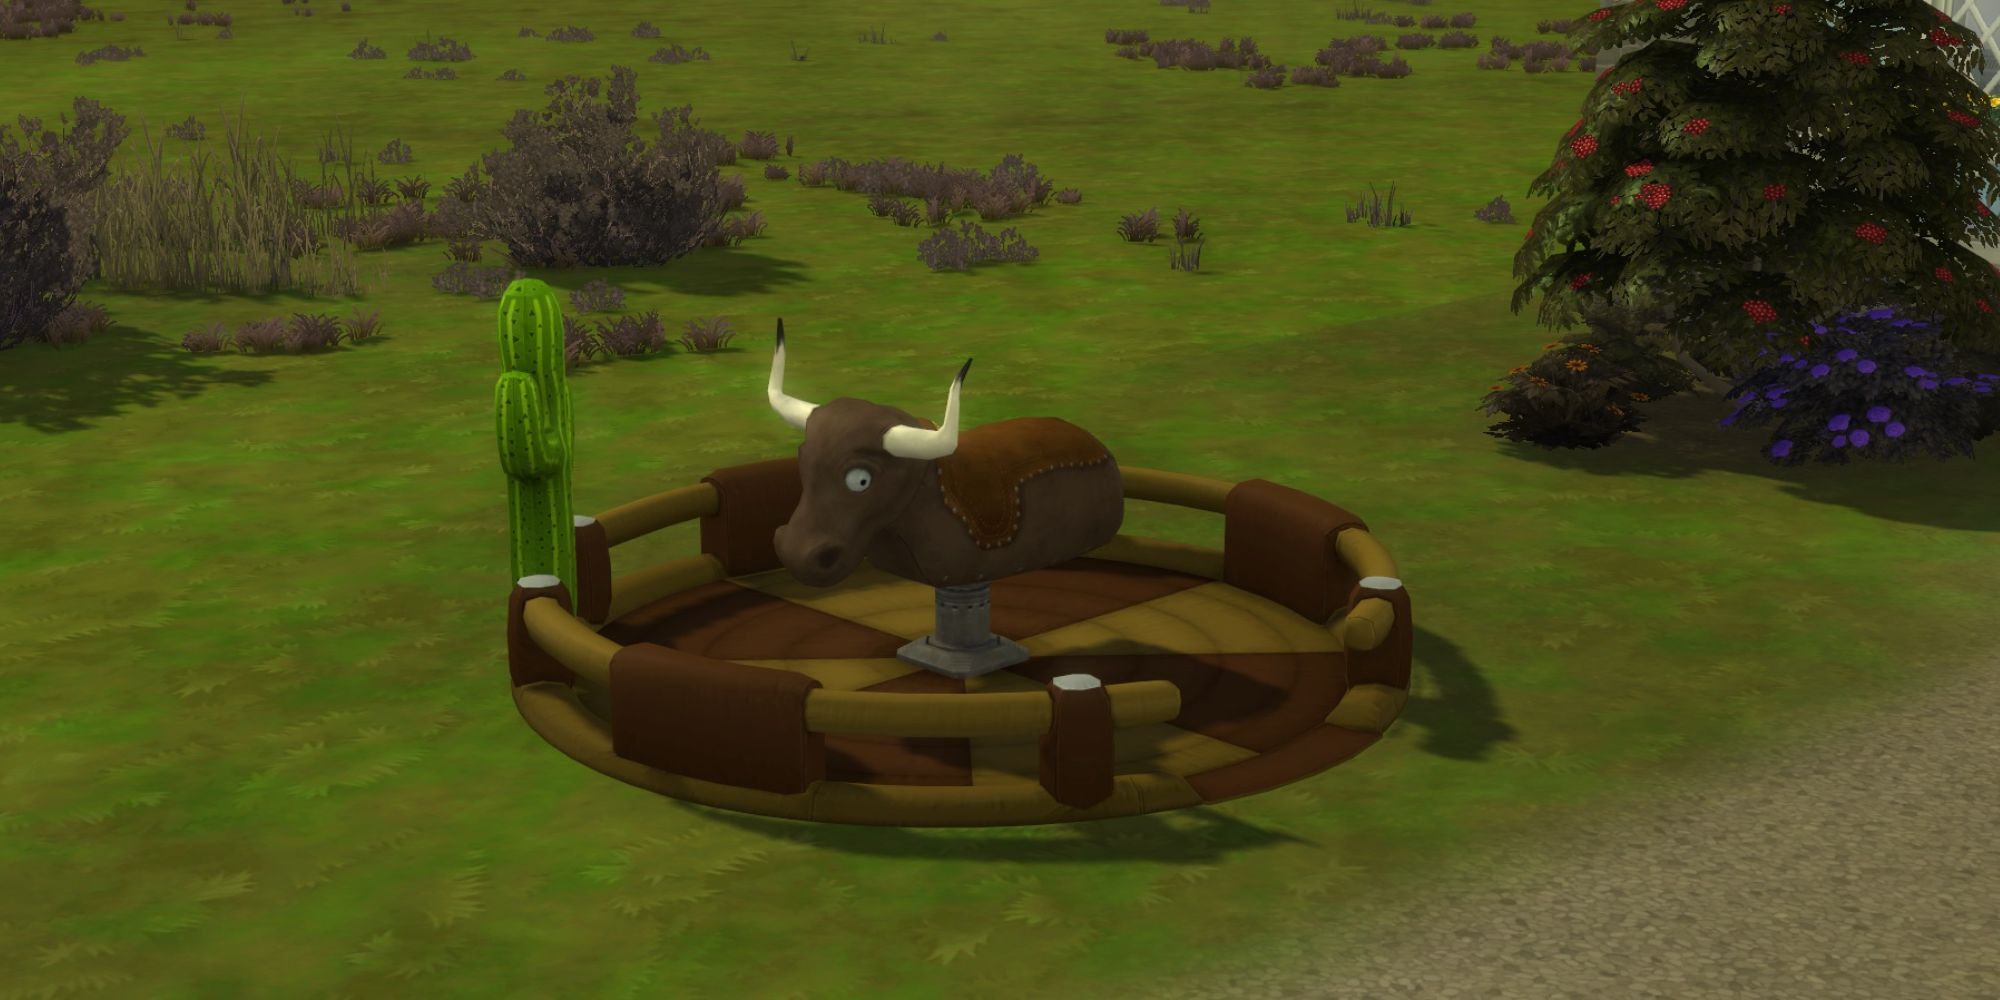 Mechanical Bull item in The Sims 4